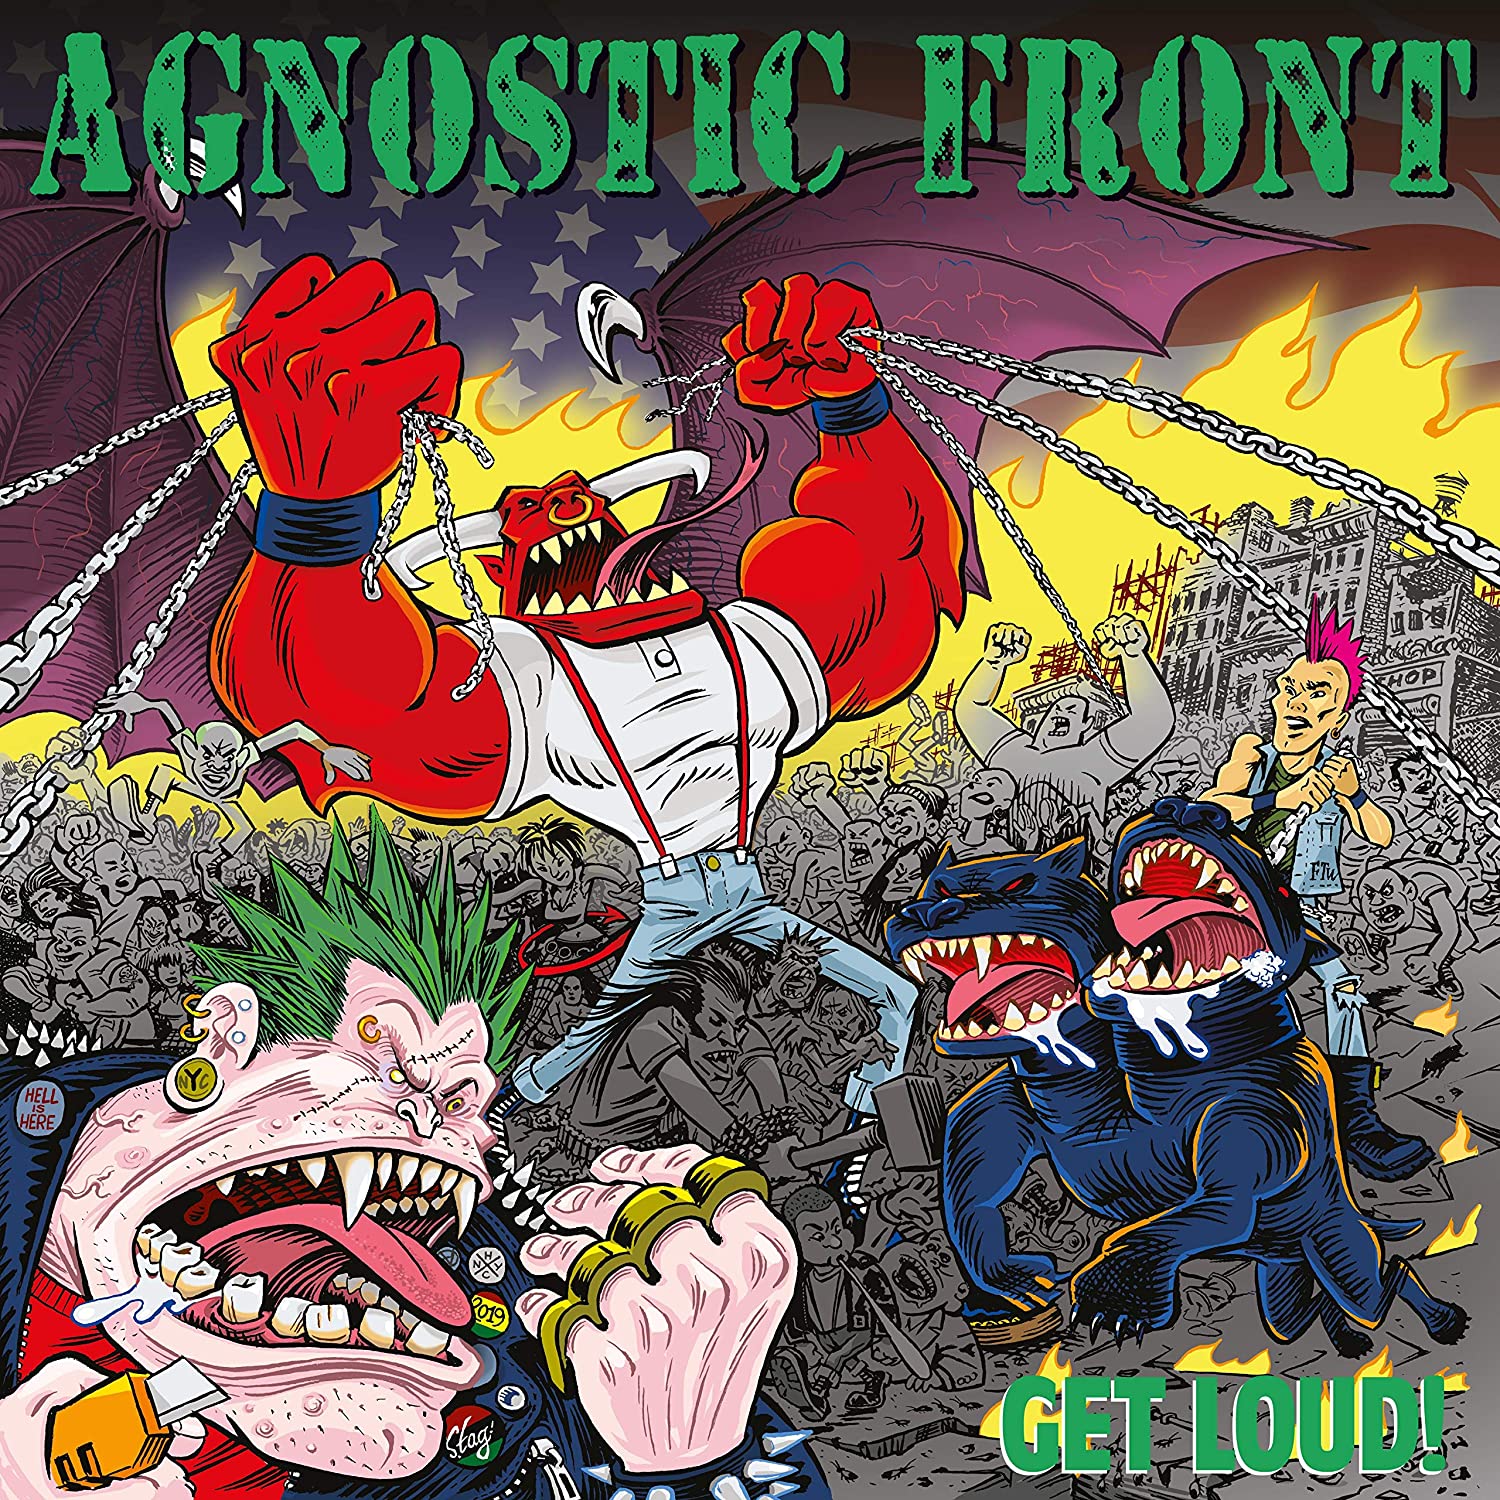 Get Loud! by Agnostic Front